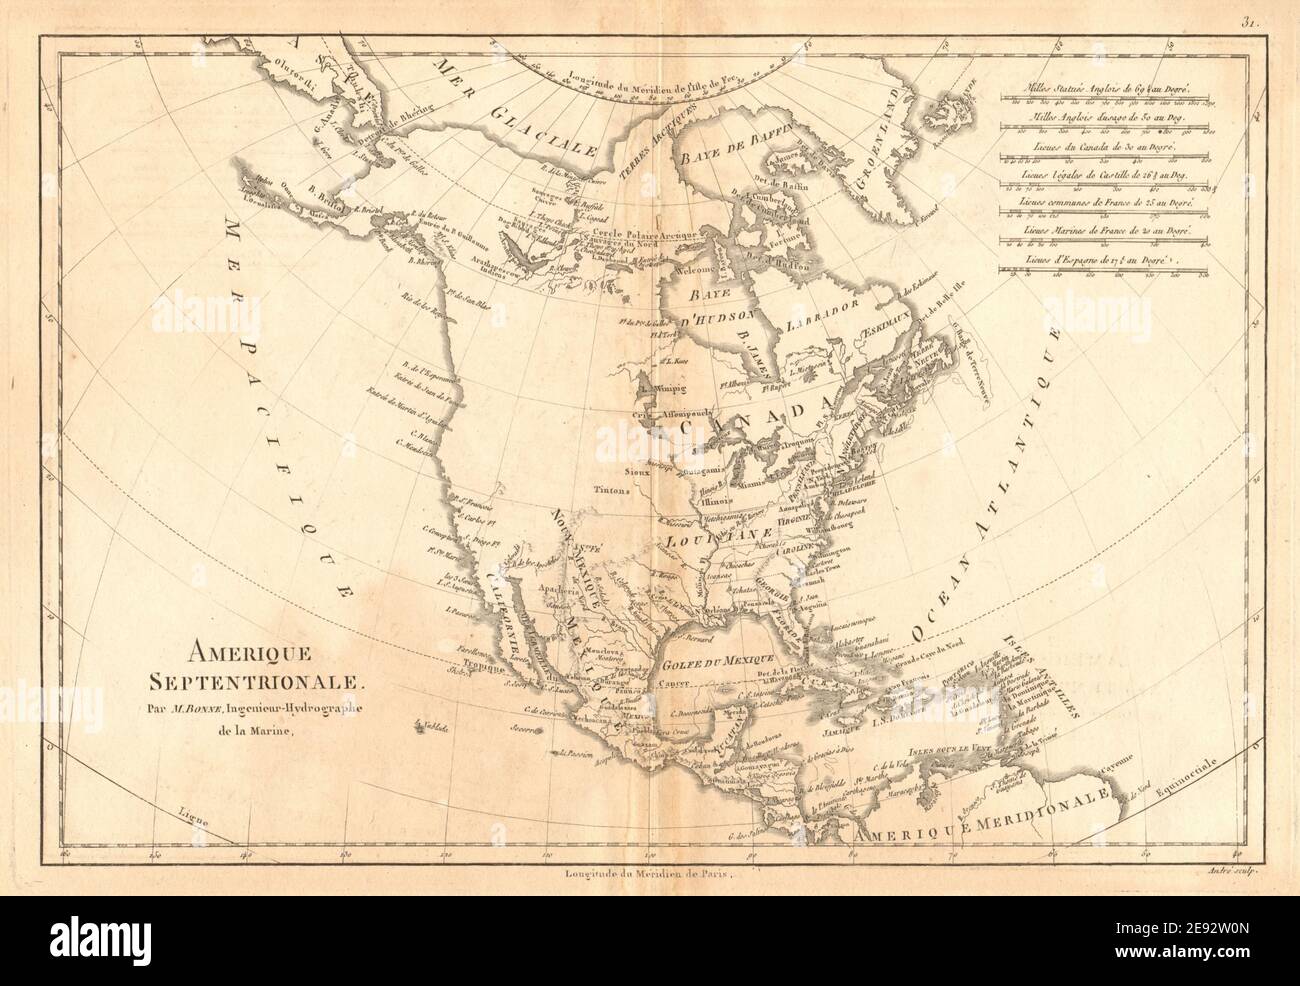 Amerique Septentrionale. Antique map of North America. BONNE 1787 old Stock Photo